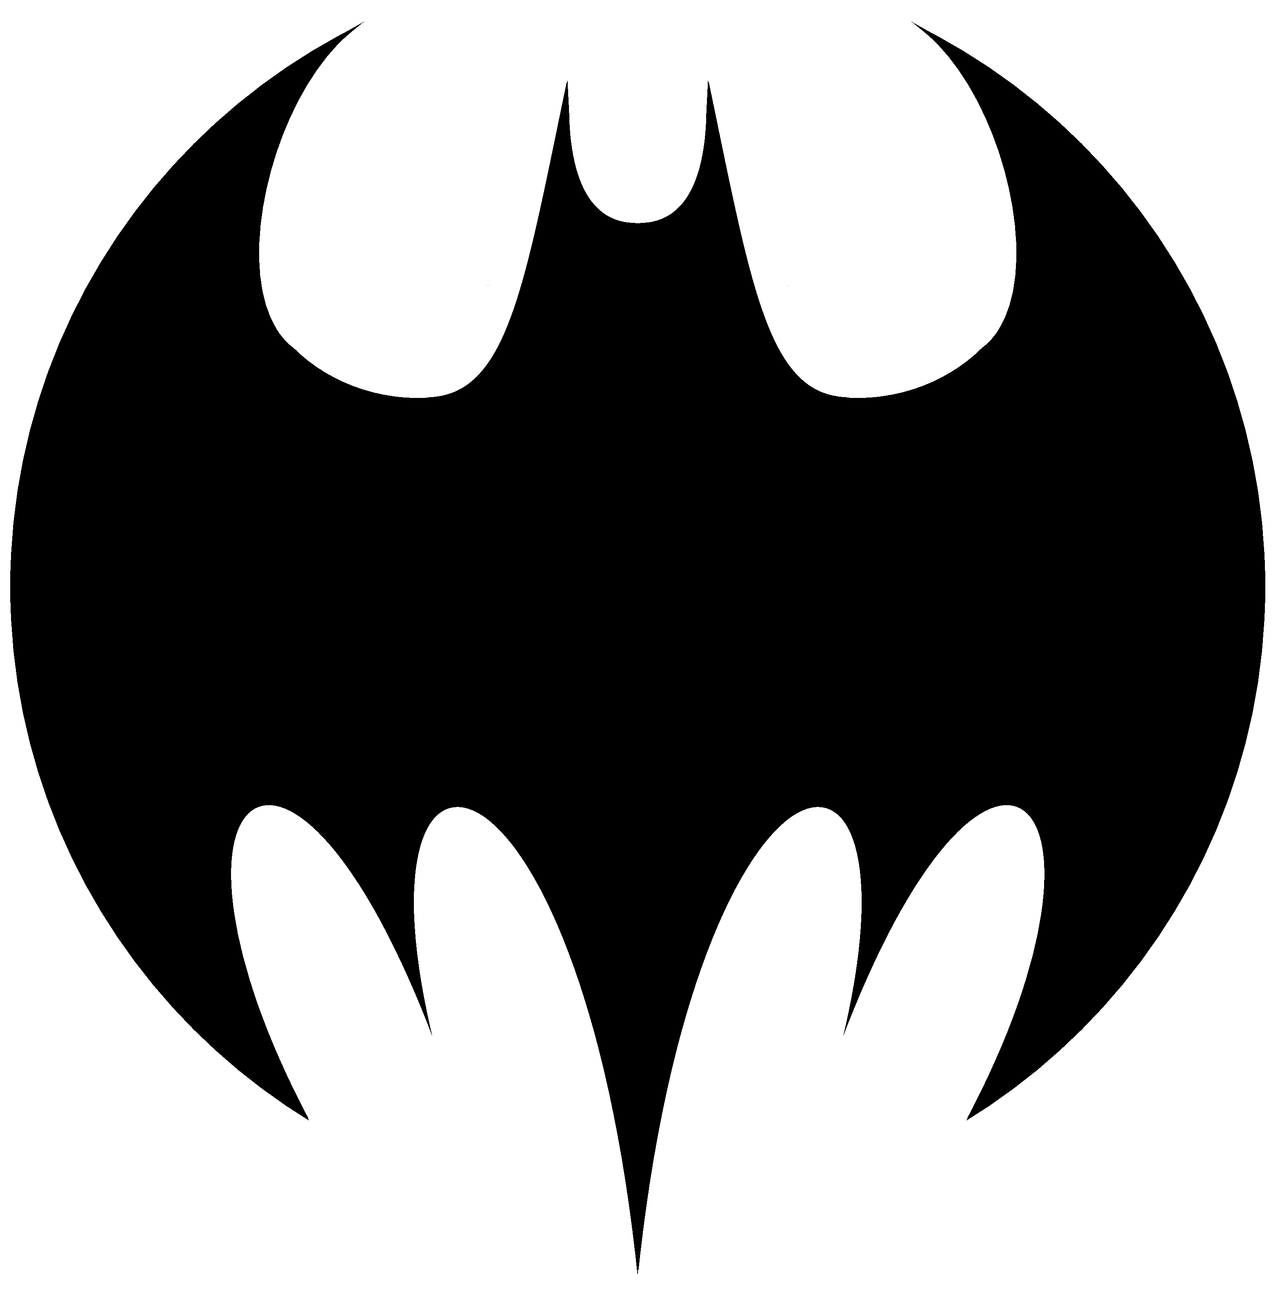 Batman Logo Outline